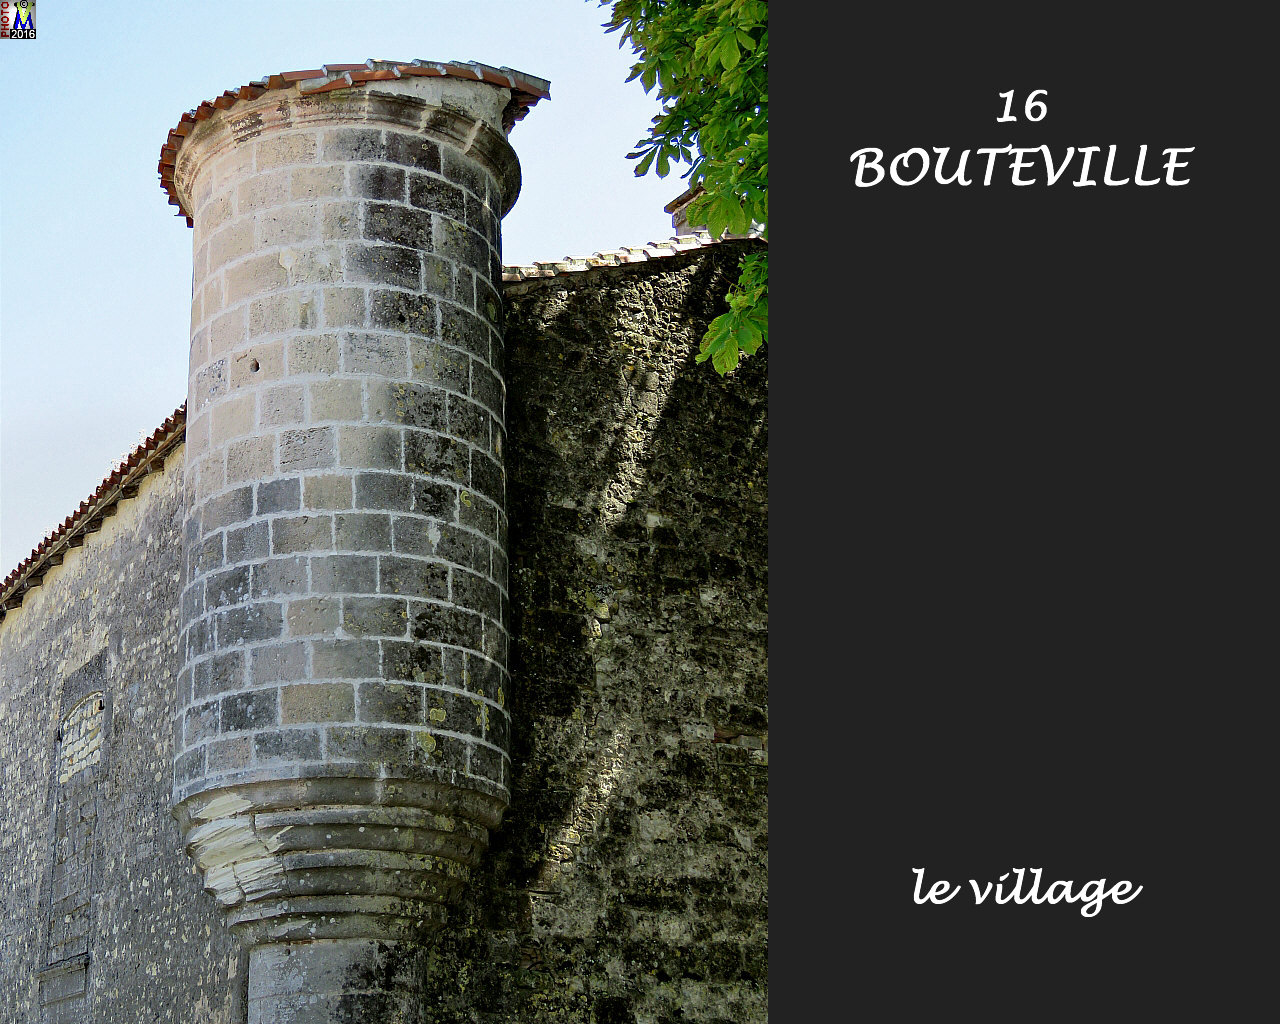 16BOUTEVILLE_village_1008.jpg